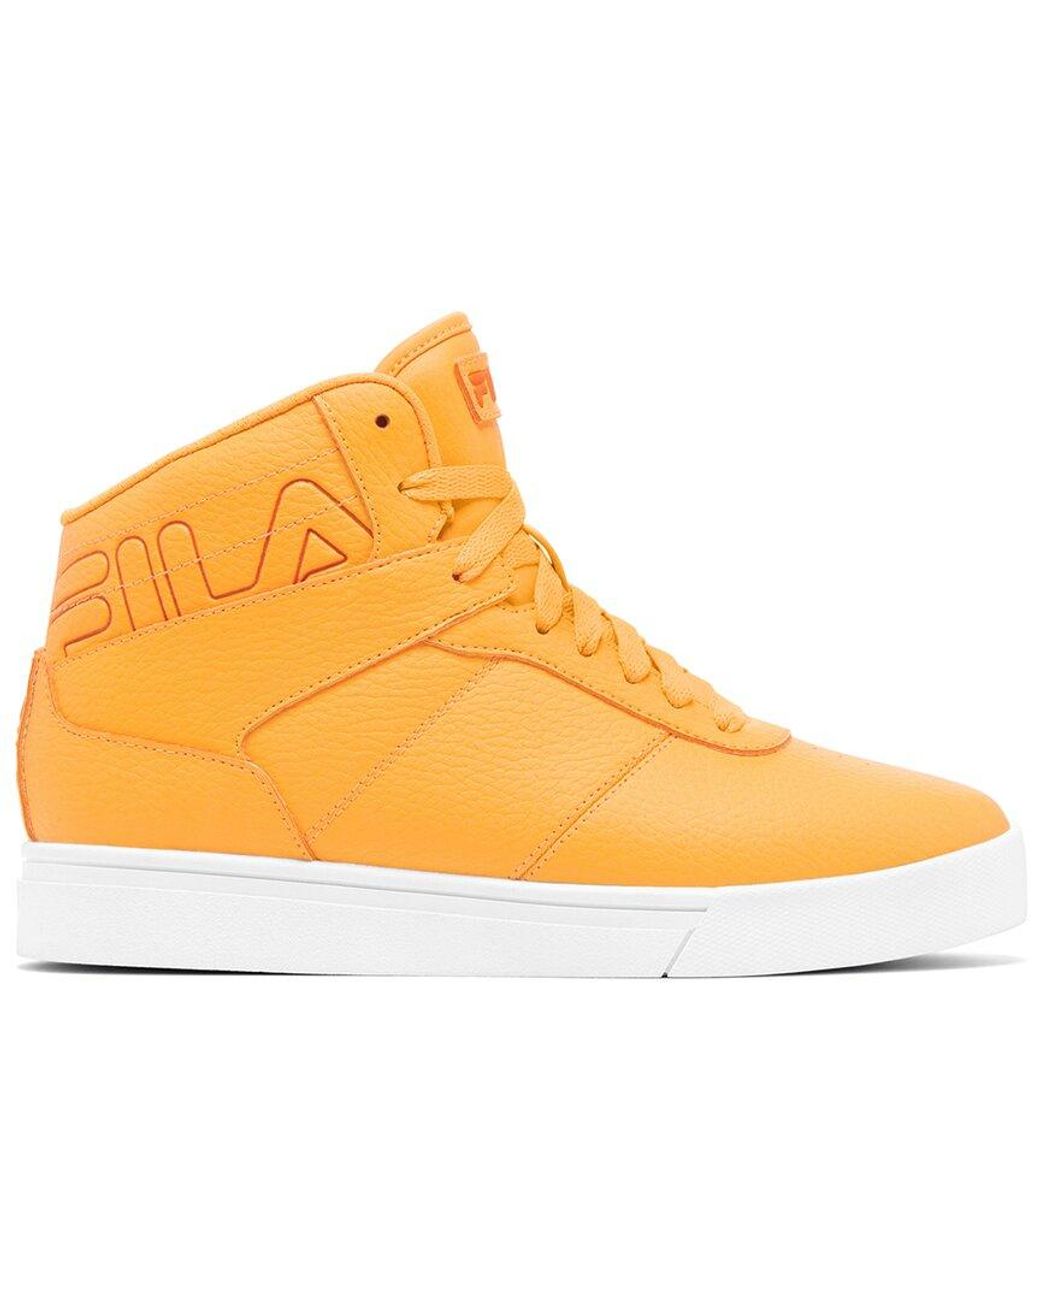 FILA Sandenal Men's Lace Up Sneakers - Glacier Grey/Red Orange/Dress Blue |  Shop Today. Get it Tomorrow! | takealot.com